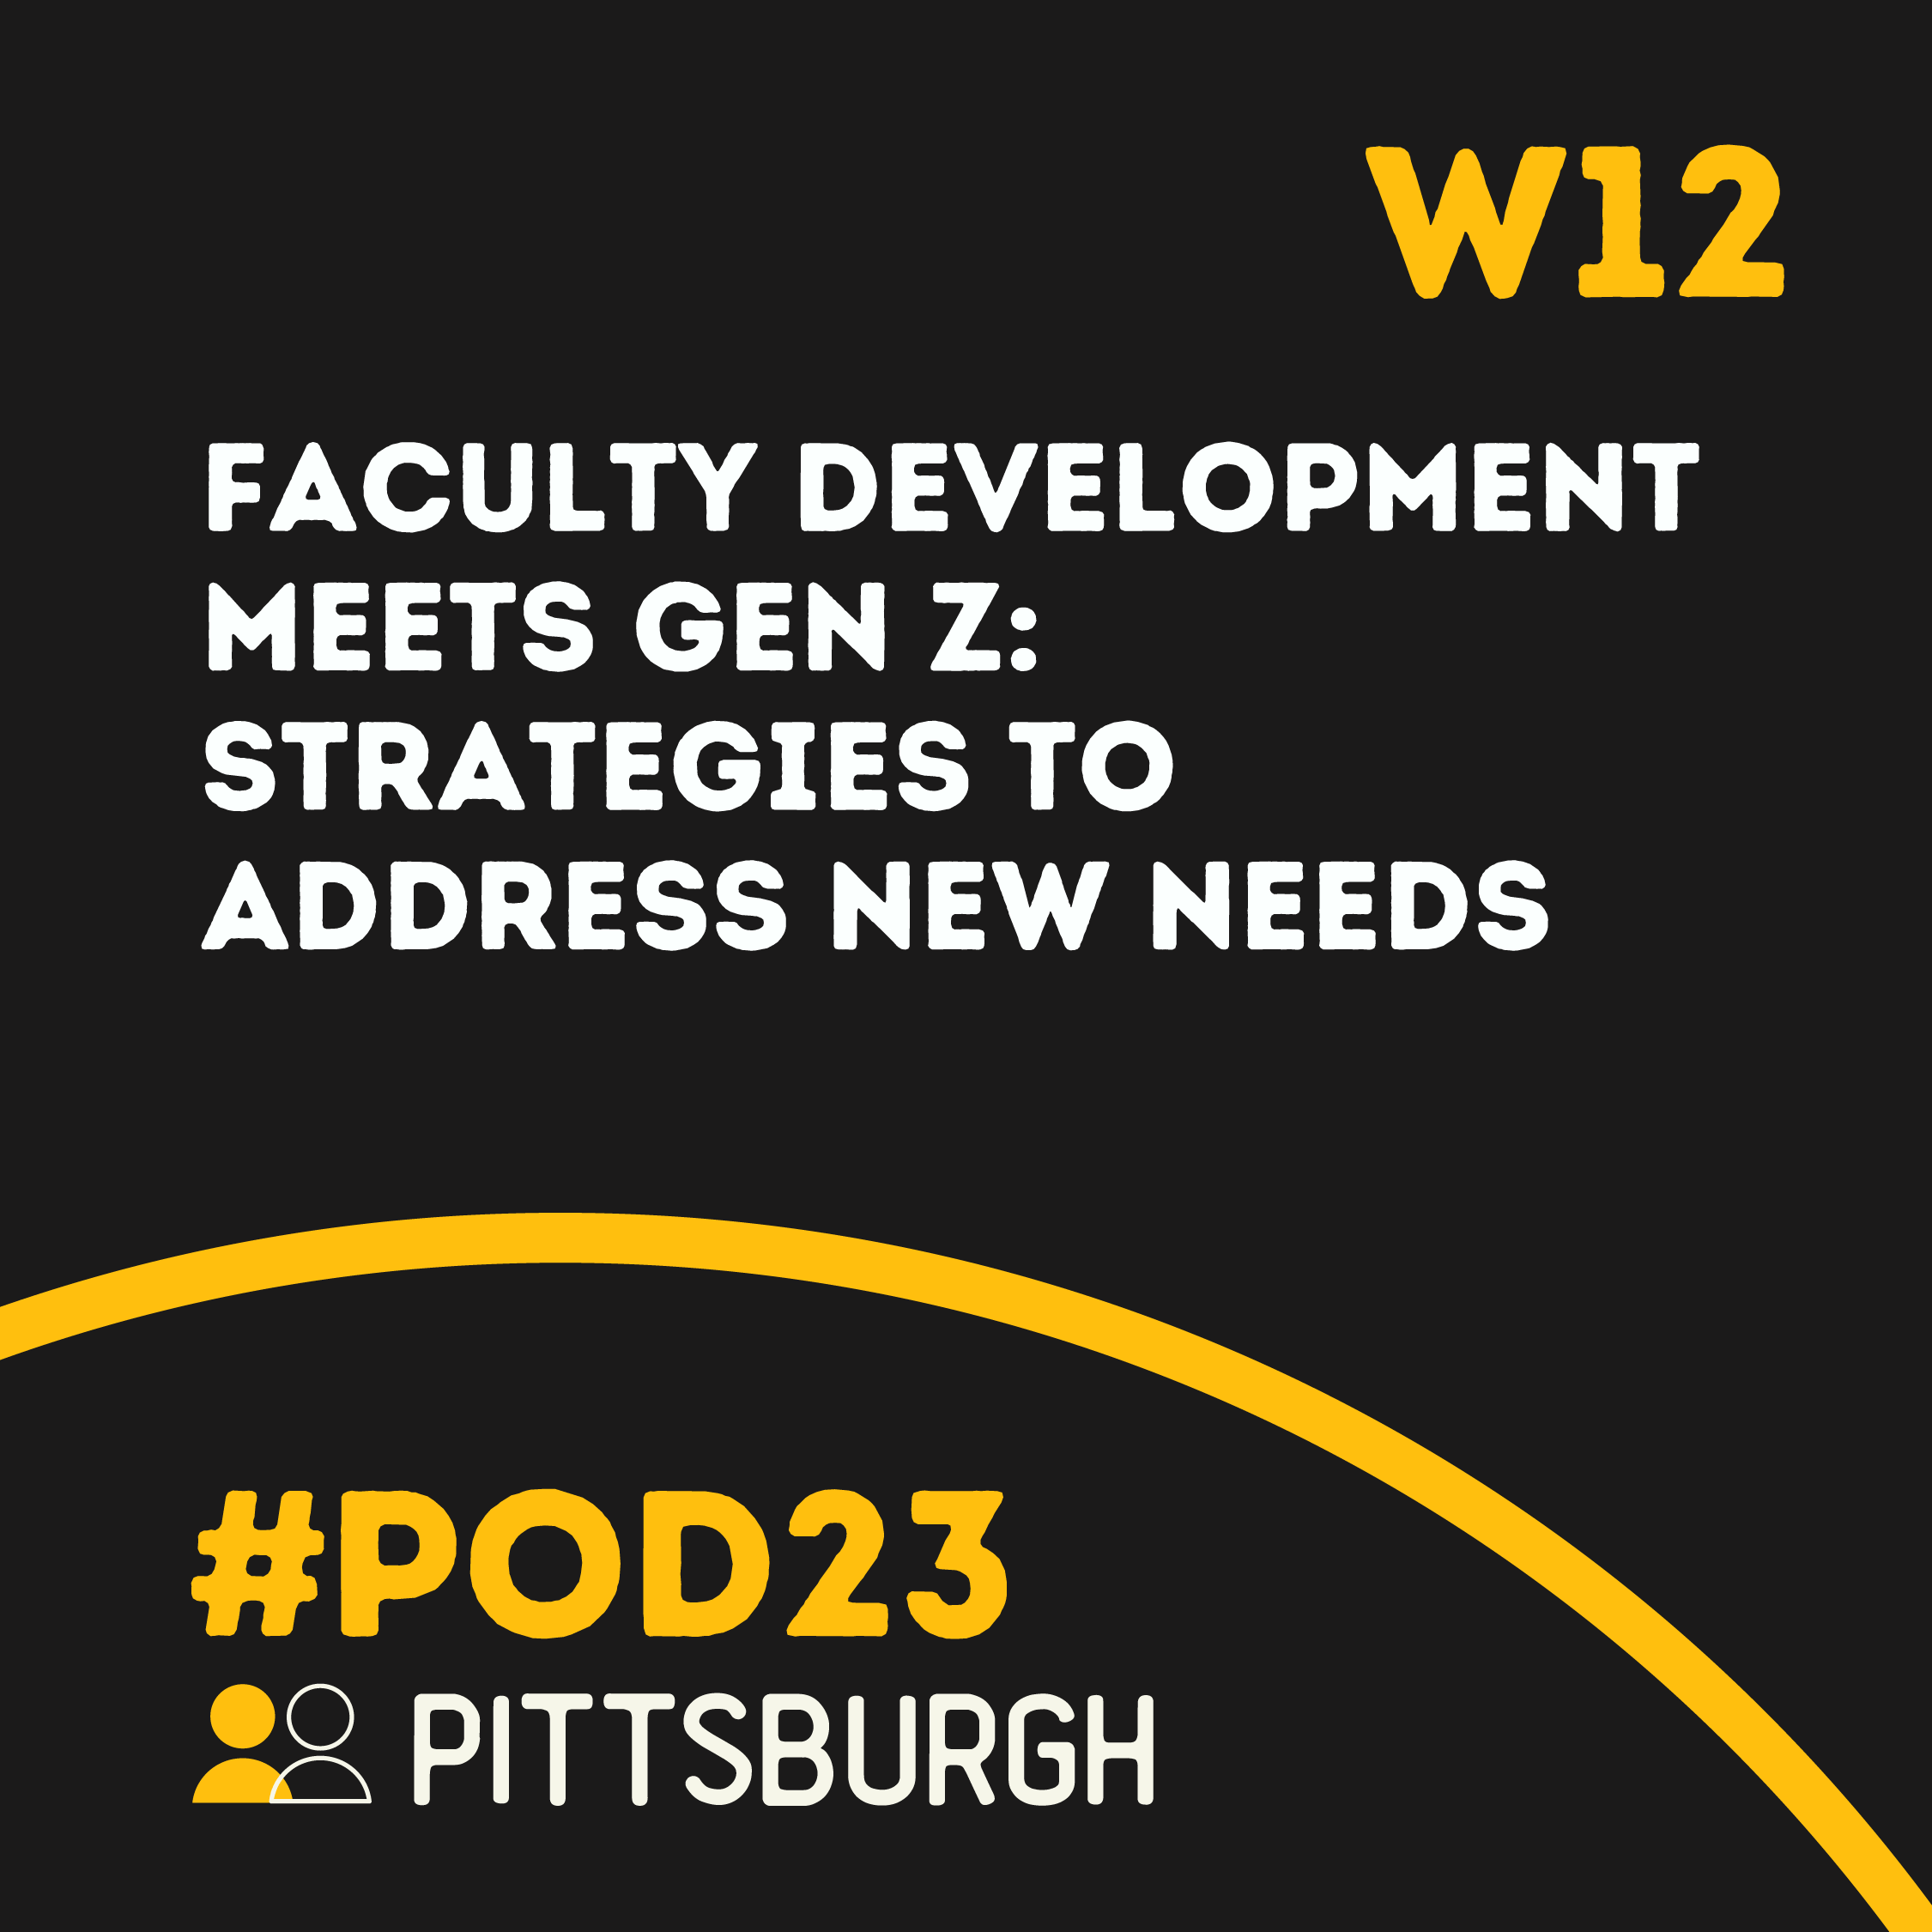 #POD23 W12: Faculty Development Meets Gen Z: Strategies to Address New Needs